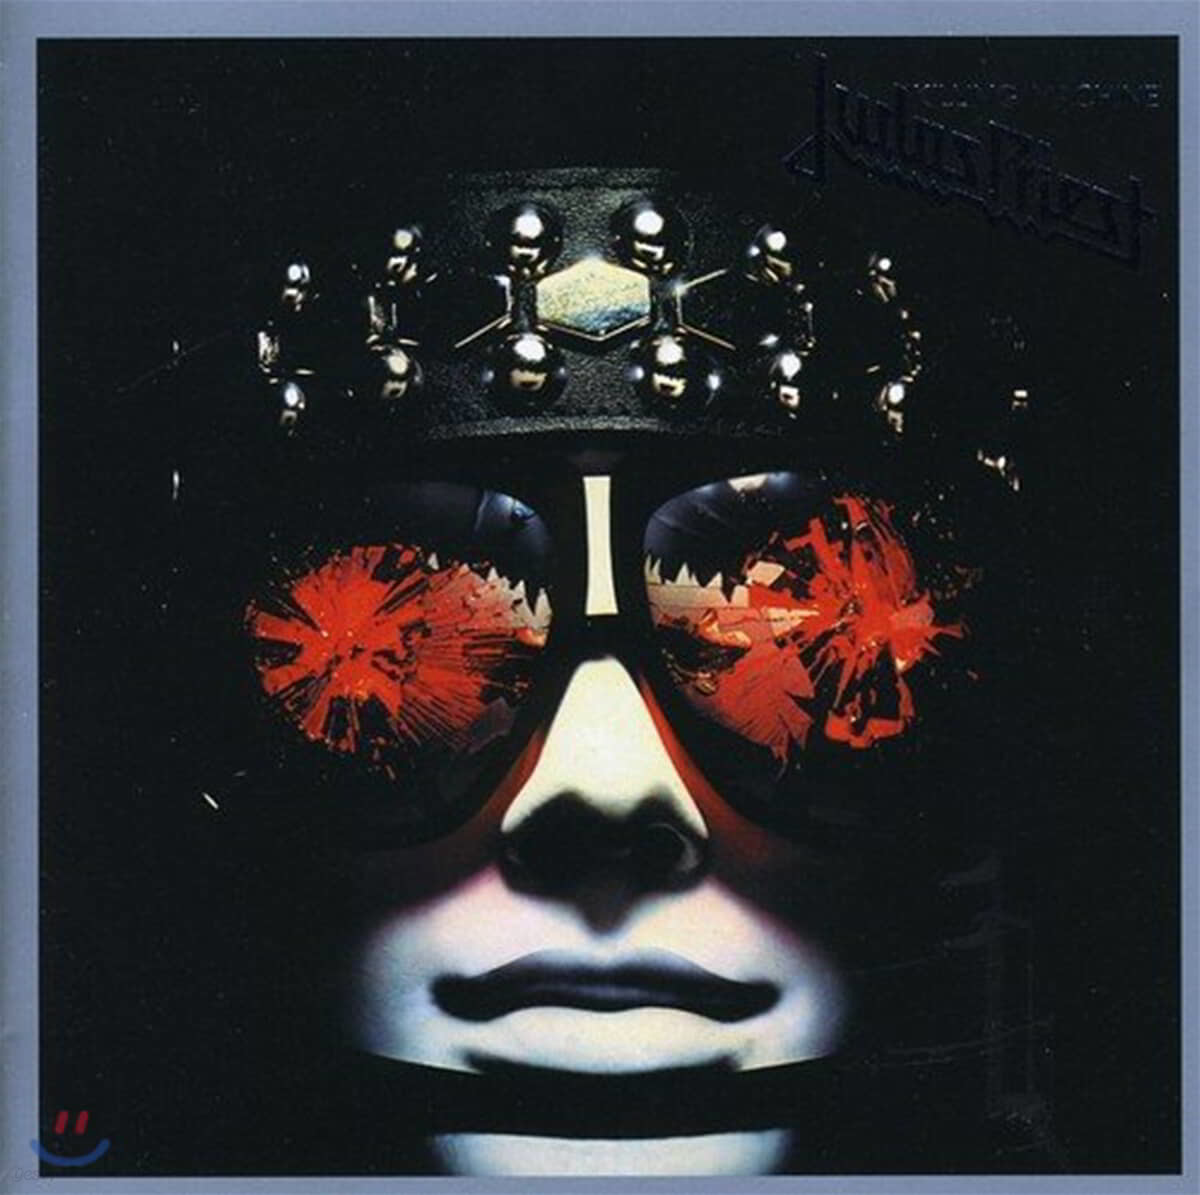 Judas Priest (주다스 프리스트) - Killing Machine